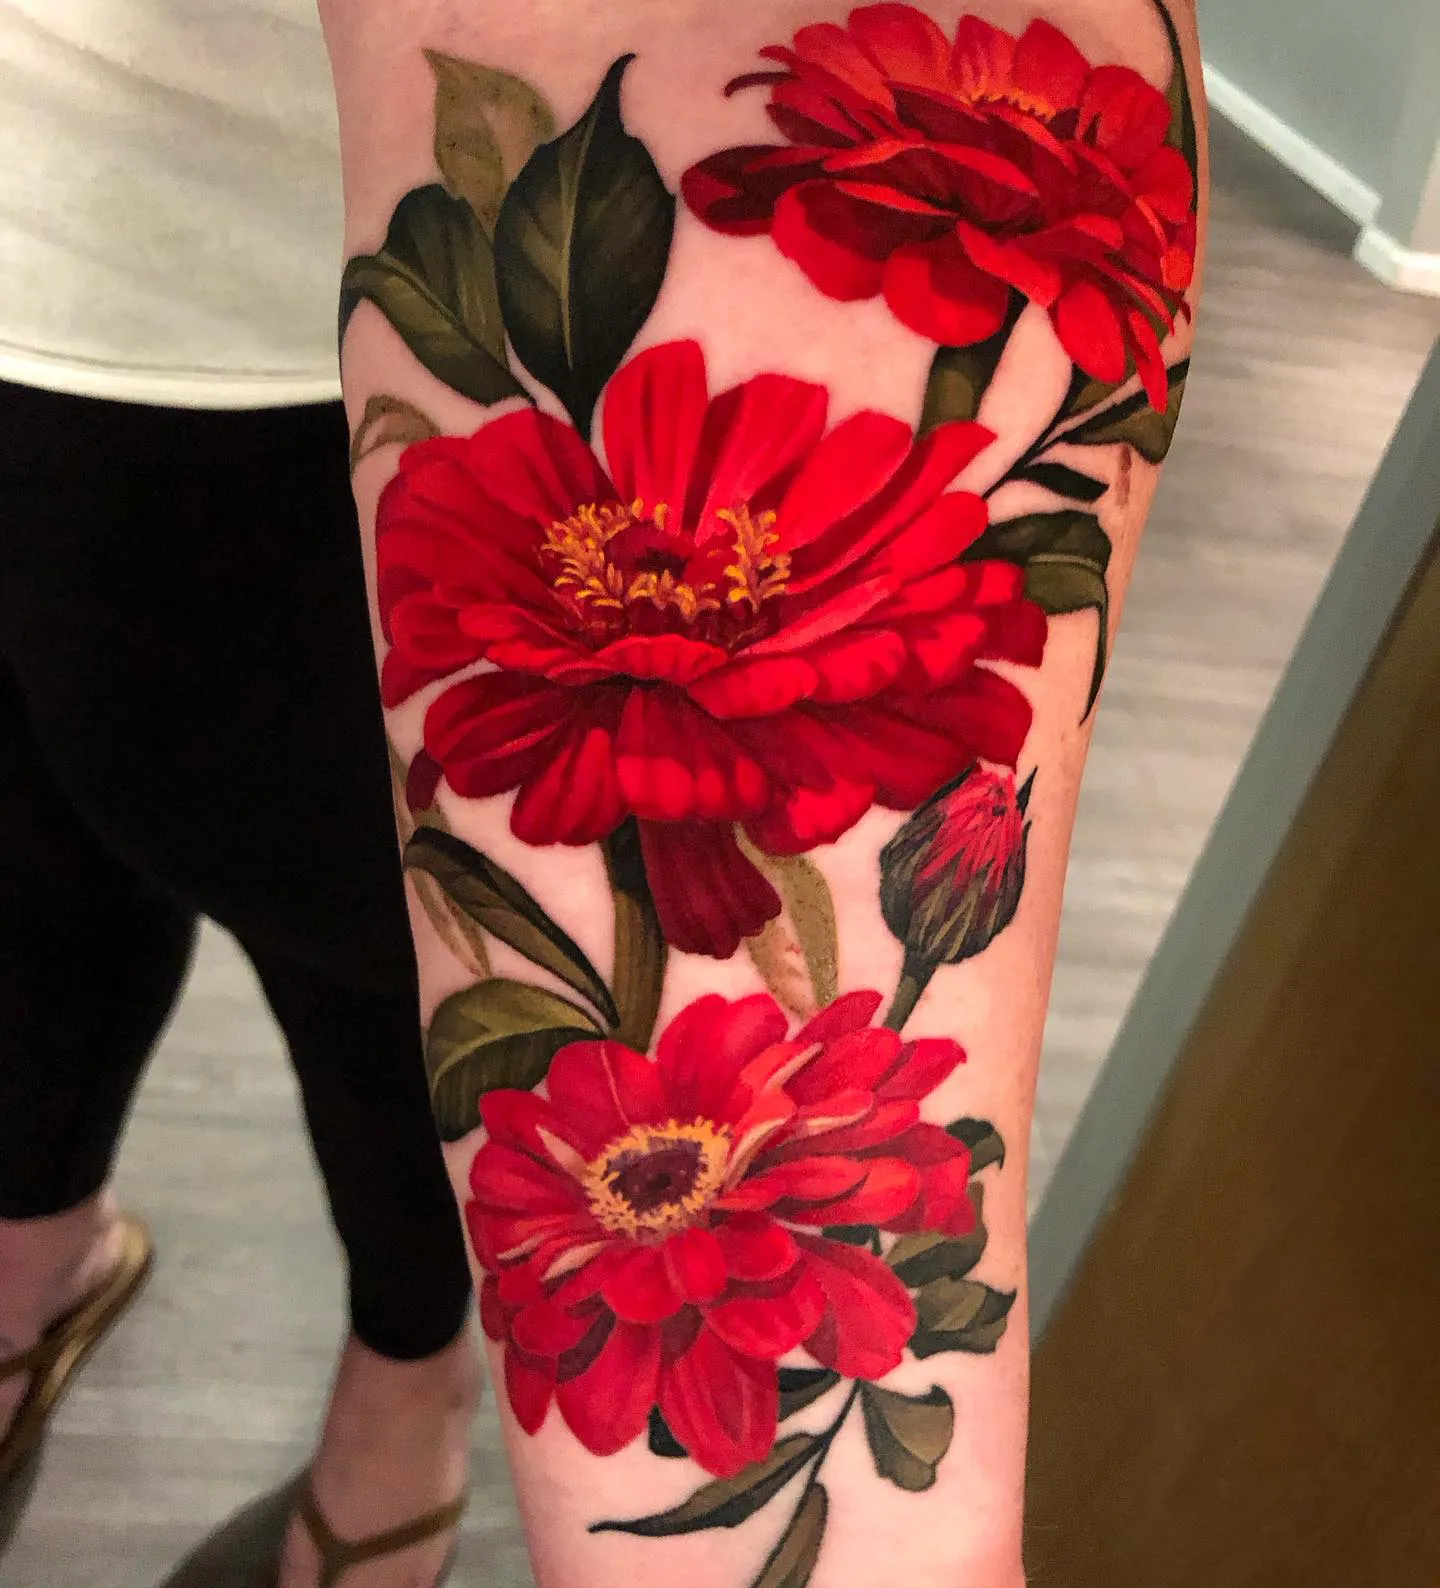 Vibrant Red Zinnia Tattoo Wrapped Around Arm